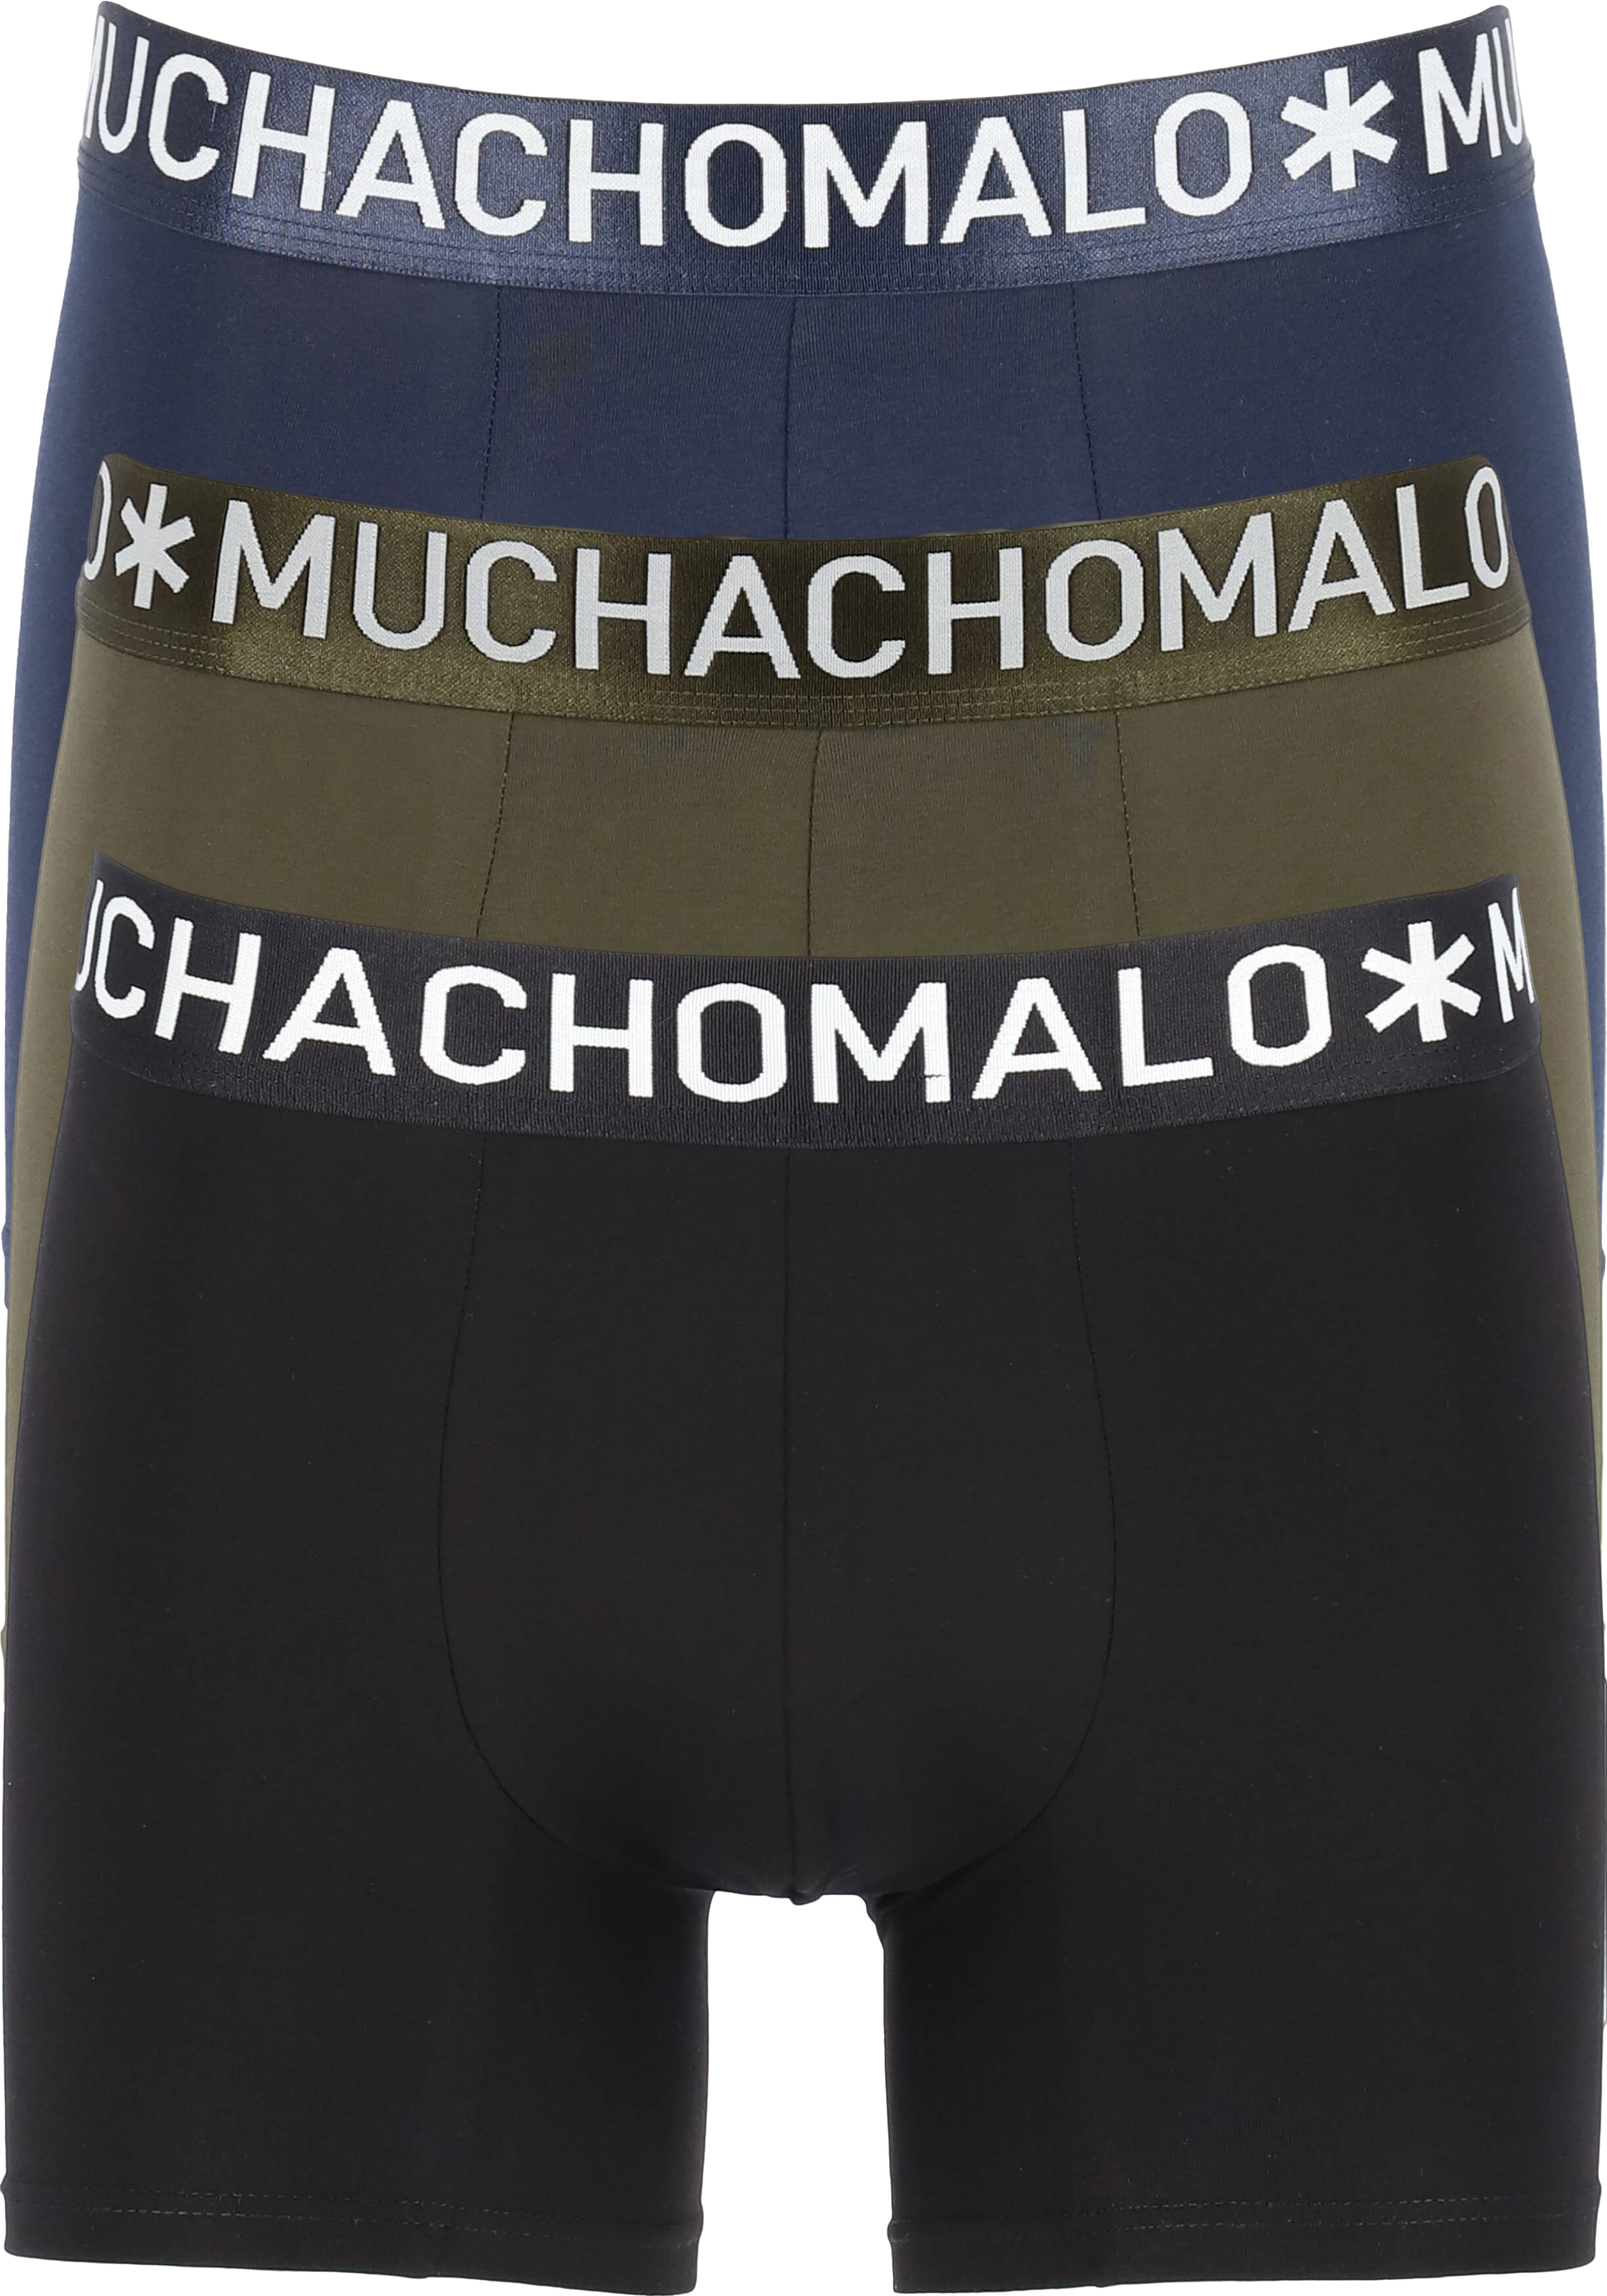 Muchachomalo Light Cotton boxershorts (3-pack), boxers normale... - Shop voorjaarsmode